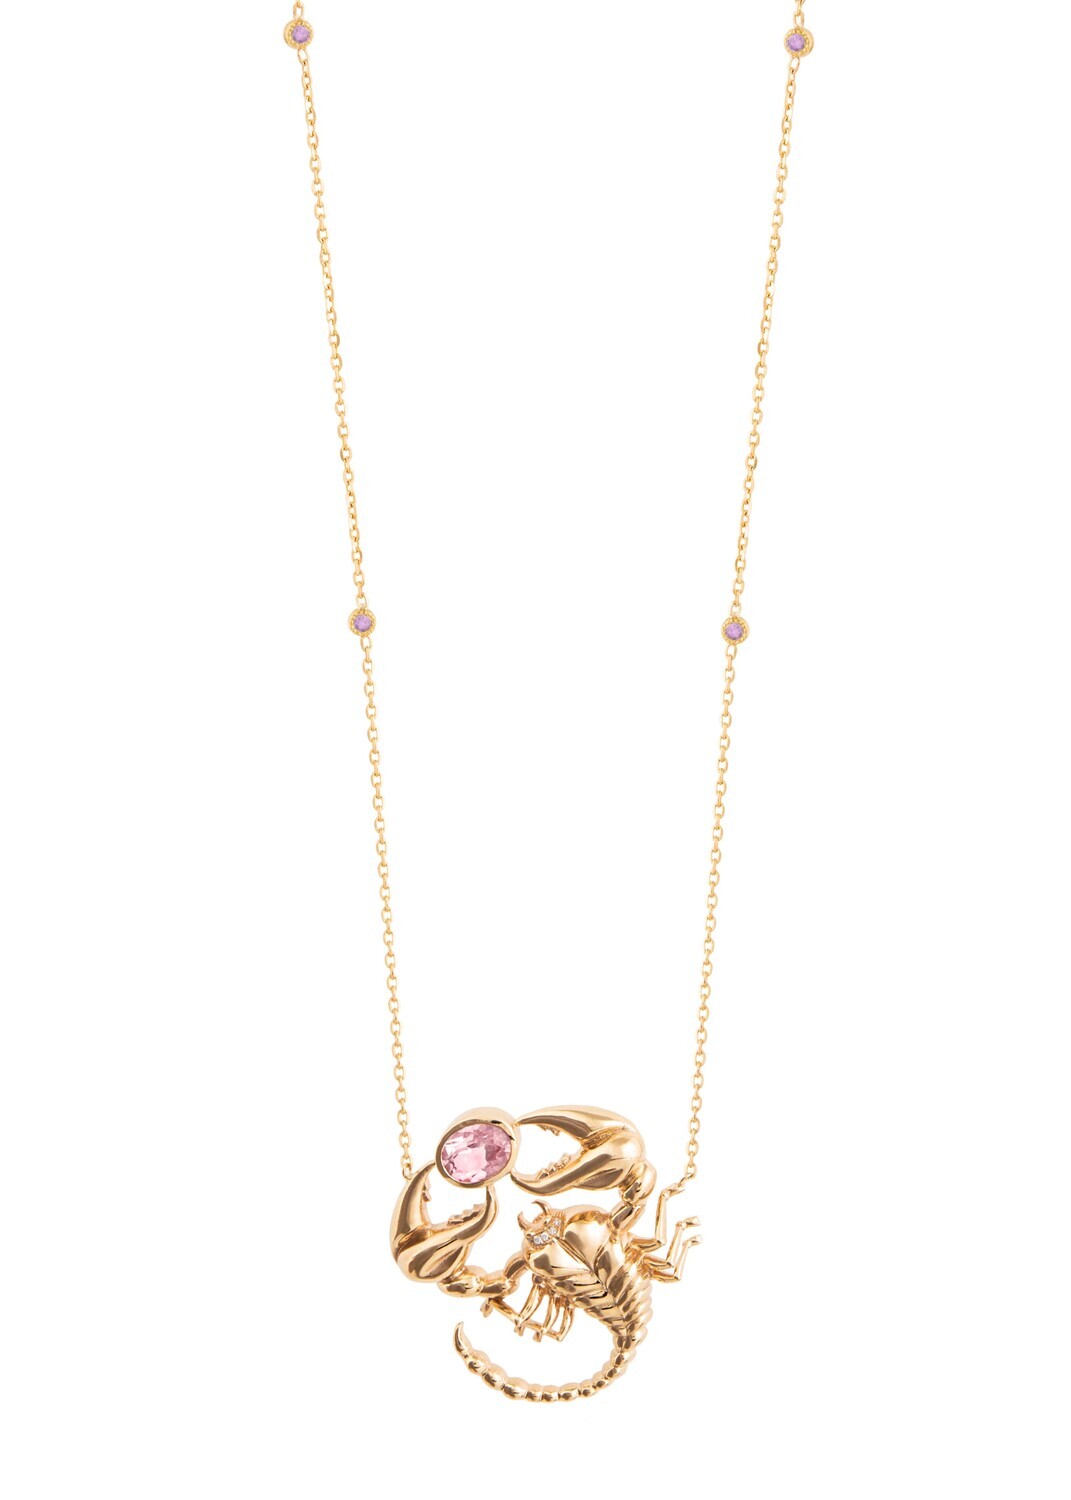 Zodiac Diamond Necklace Scorpio with Pink Sapphire and Precious Stones